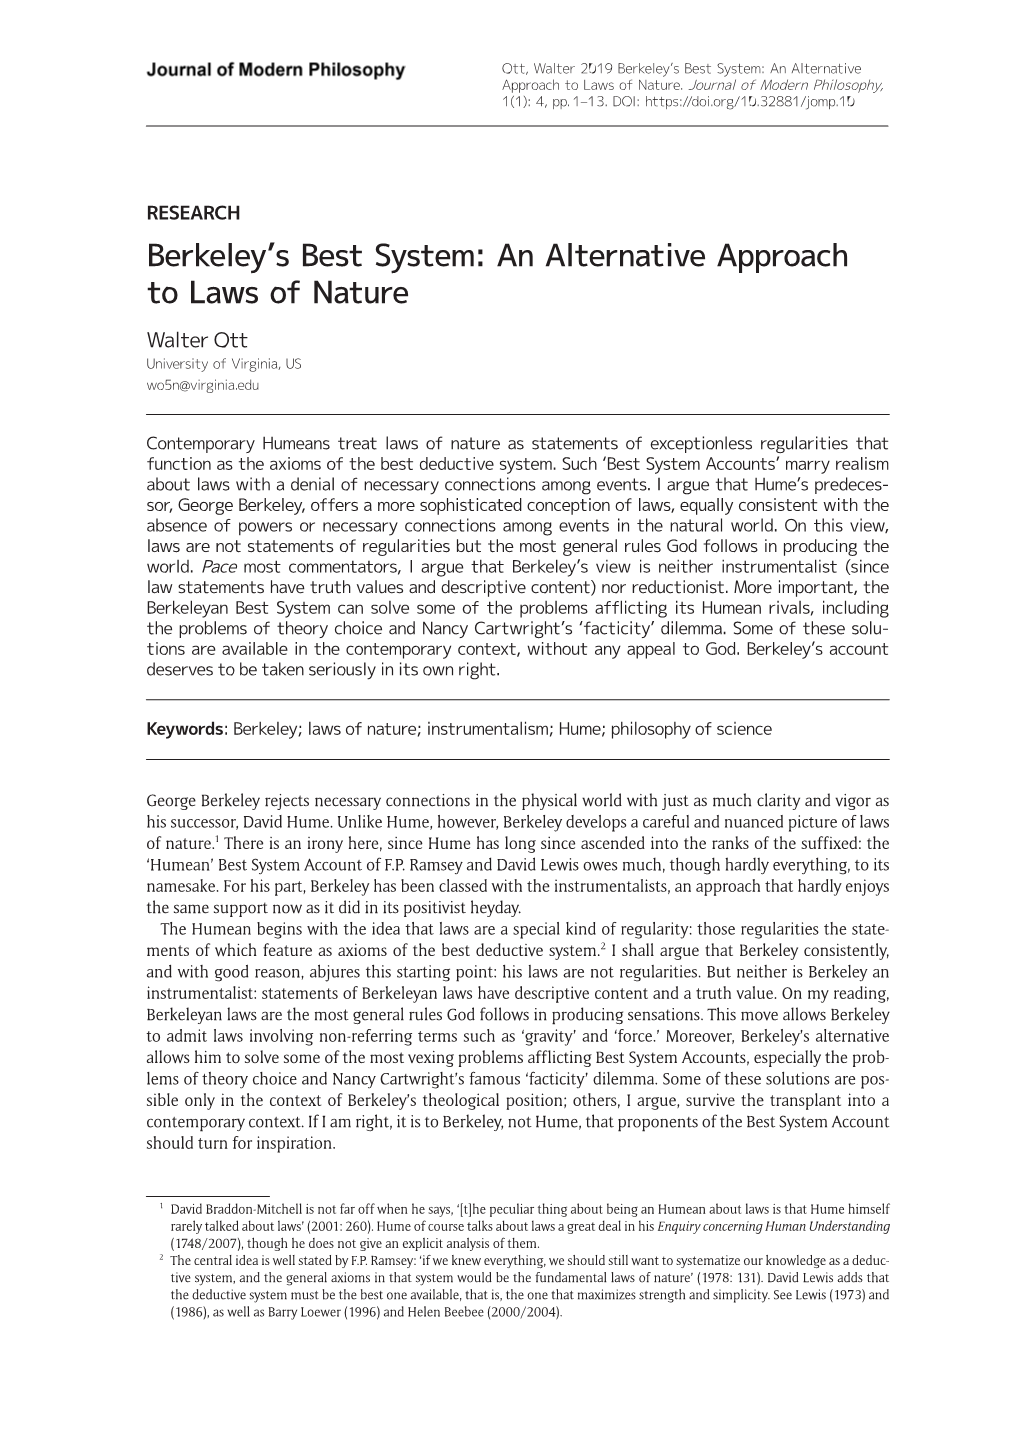 Berkeley's Best System